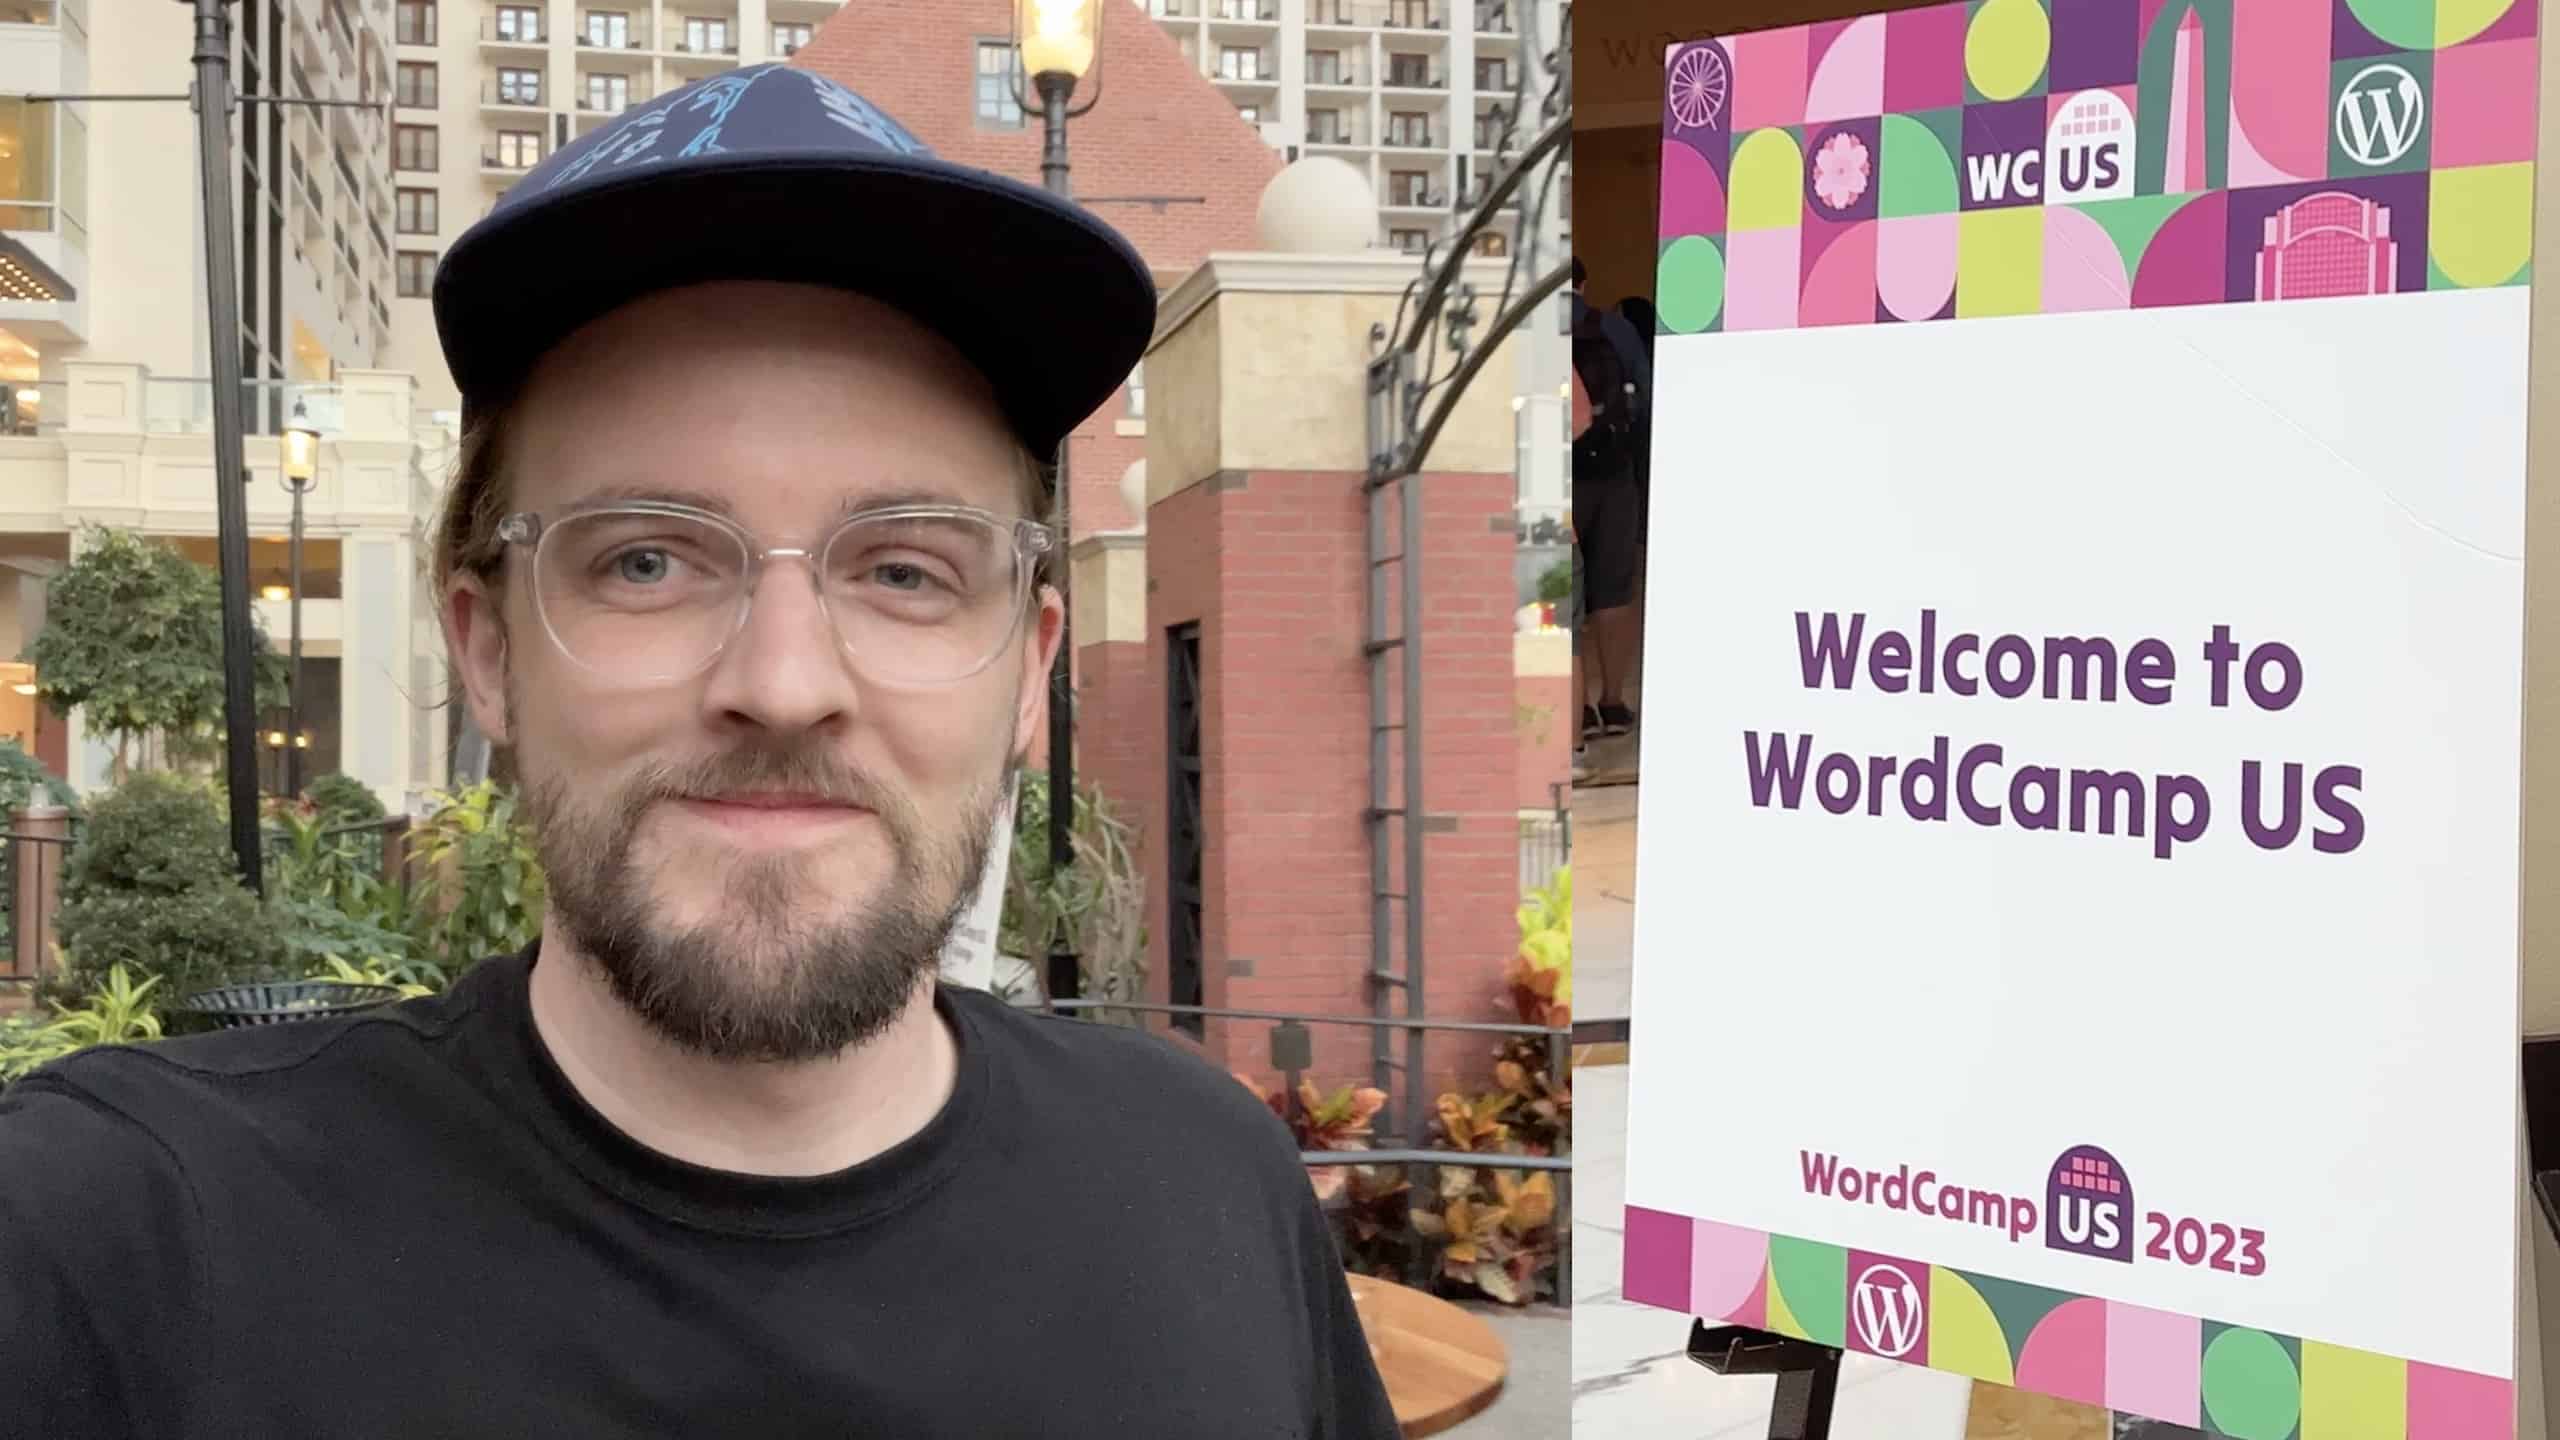 Attending Wordcamp